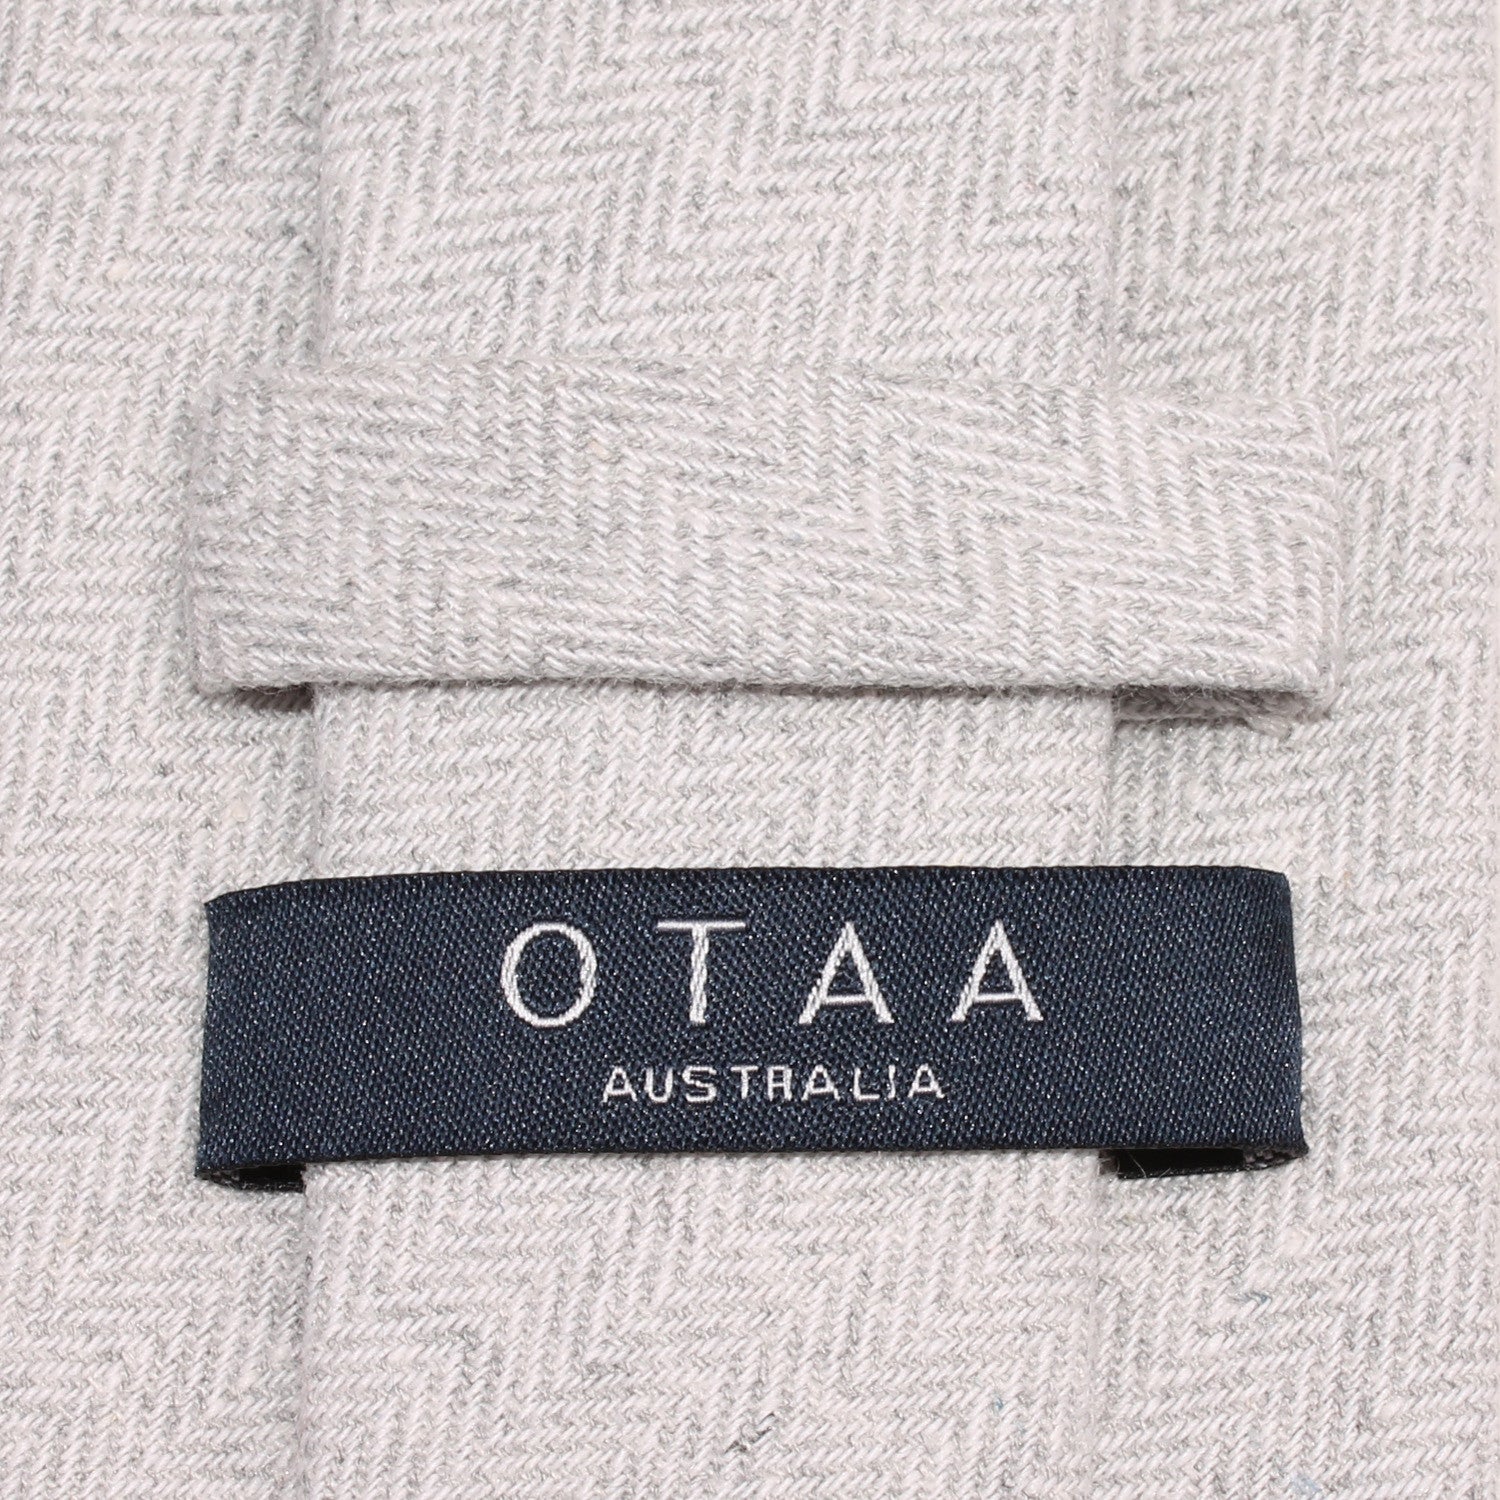 Light Grey Herringbone Linen Skinny Tie OTAA Australia